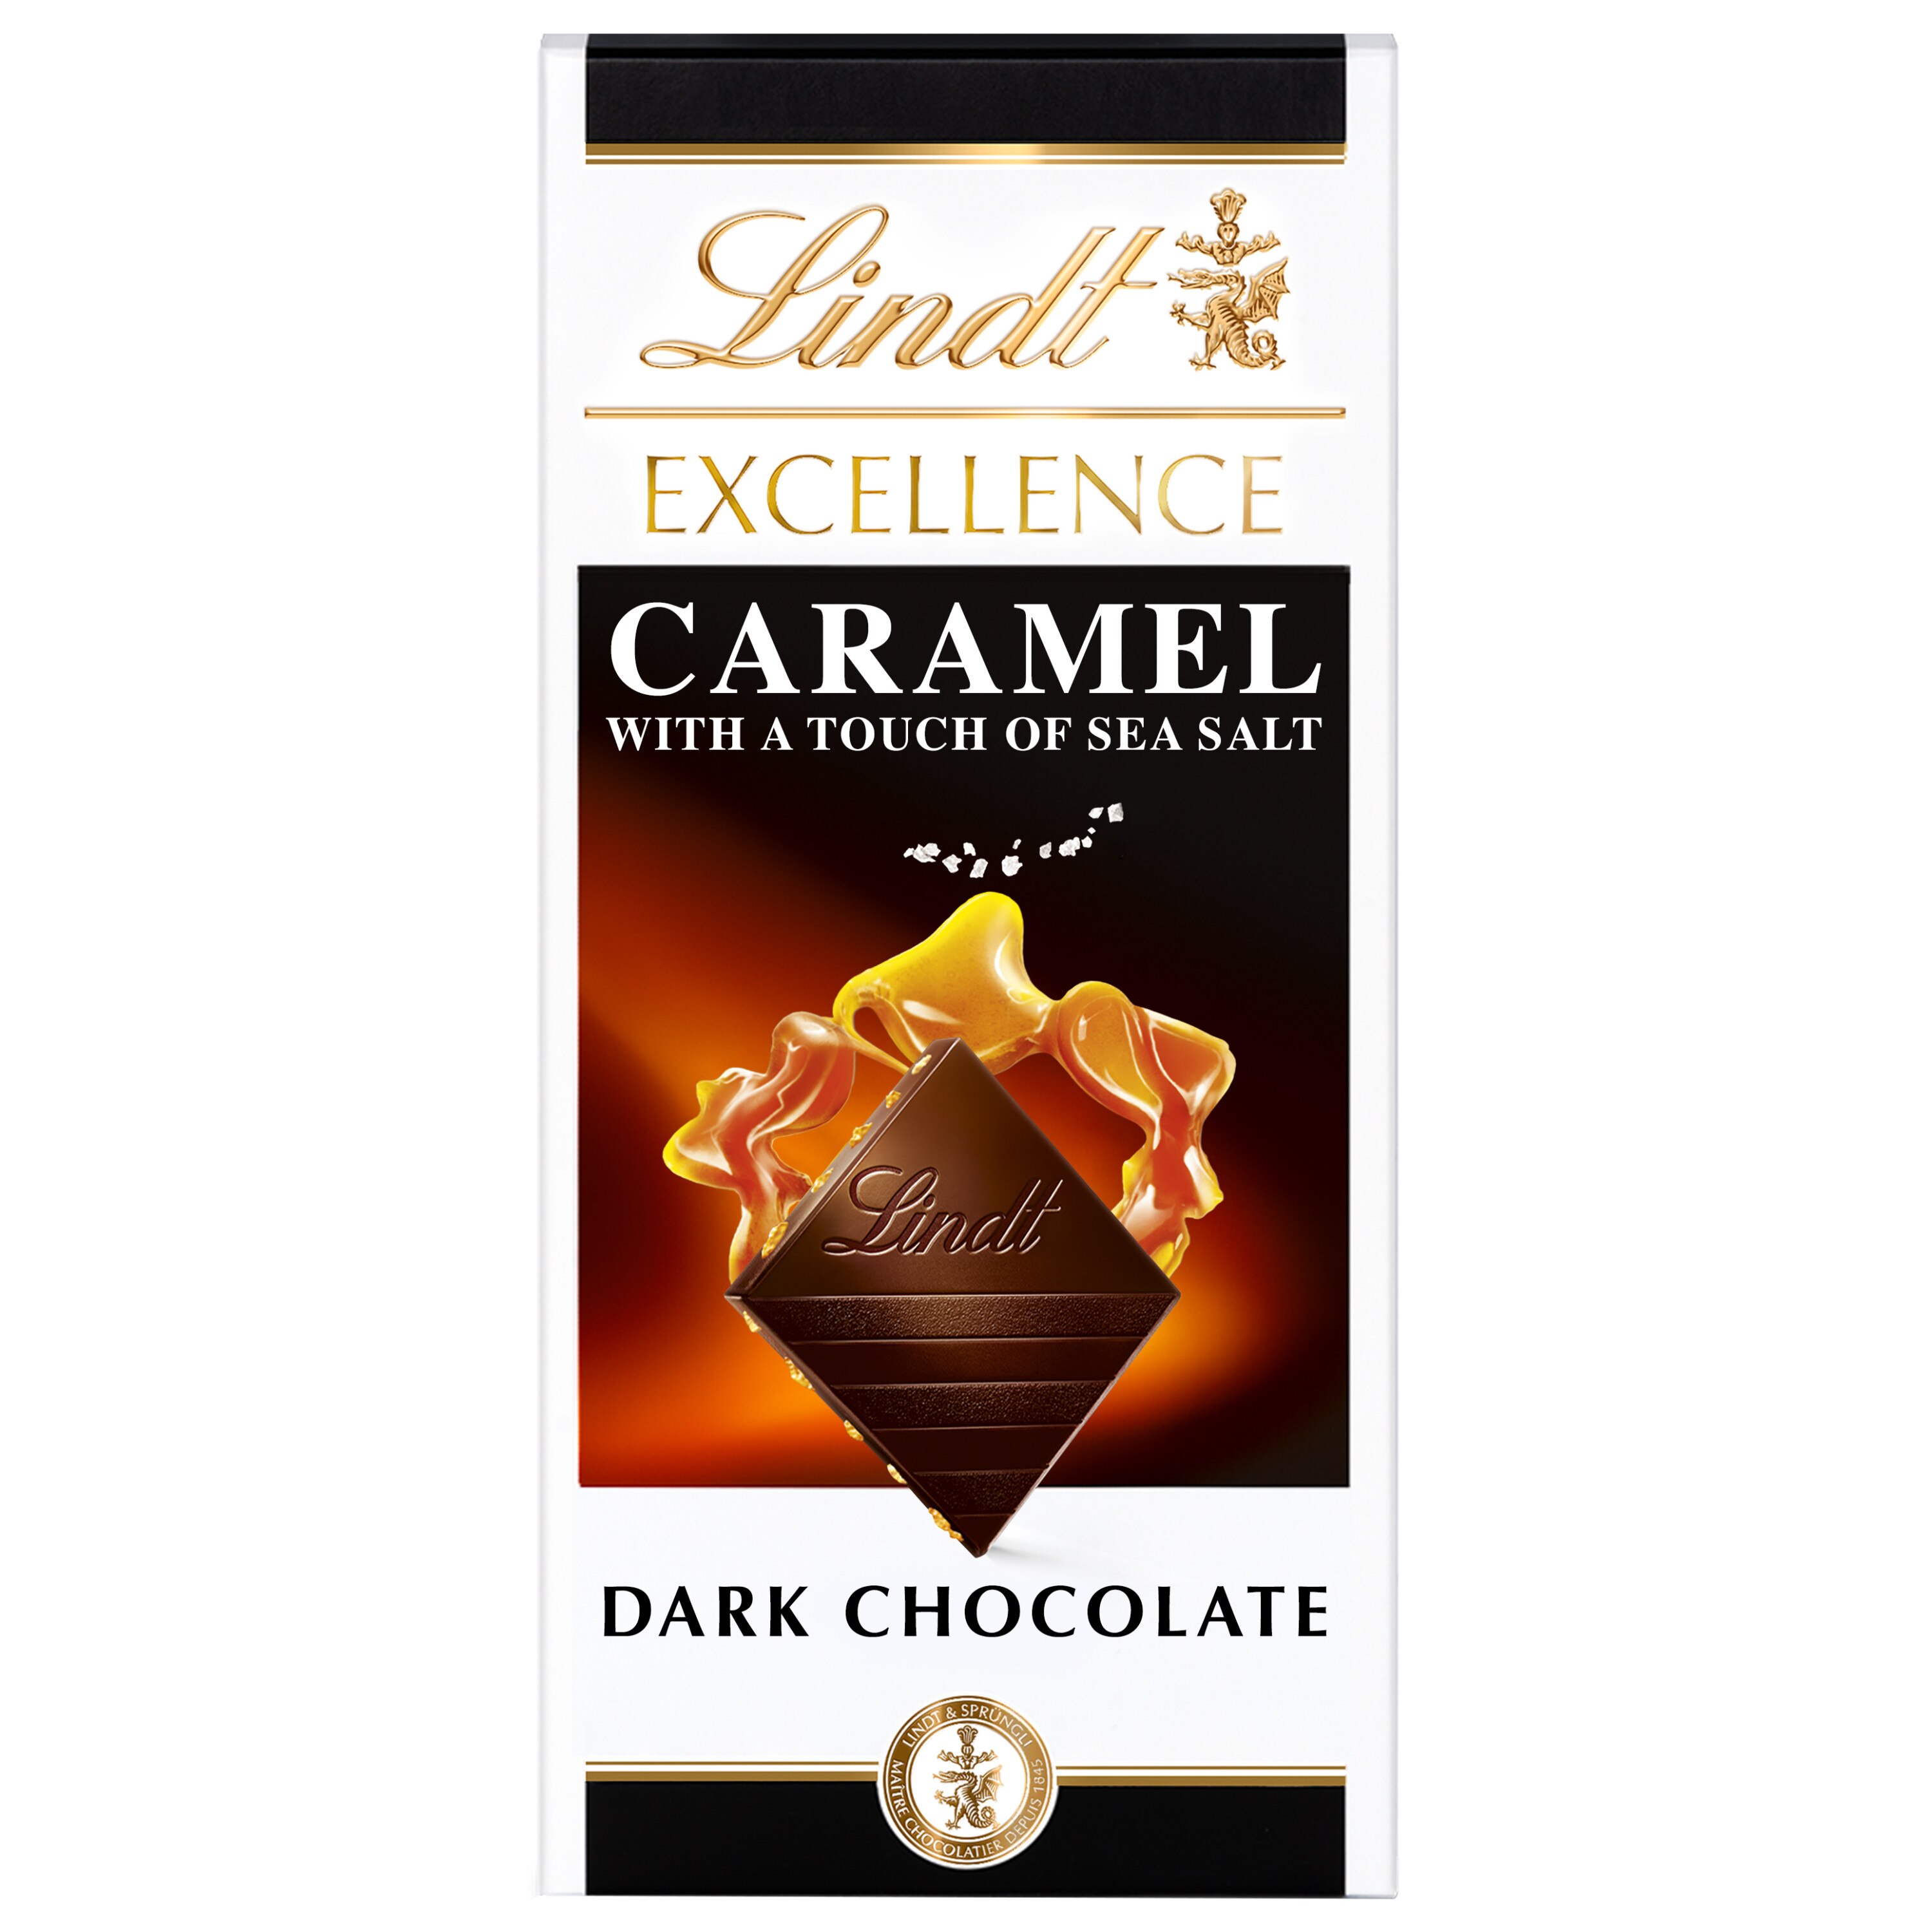 Lindt EXCELLENCE Caramel Sea Salt Dark Chocolate Bar, Dark Chocolate Candy with Pieces of Caramel and Sea Salt Crystals, 3.5 oz. Bar